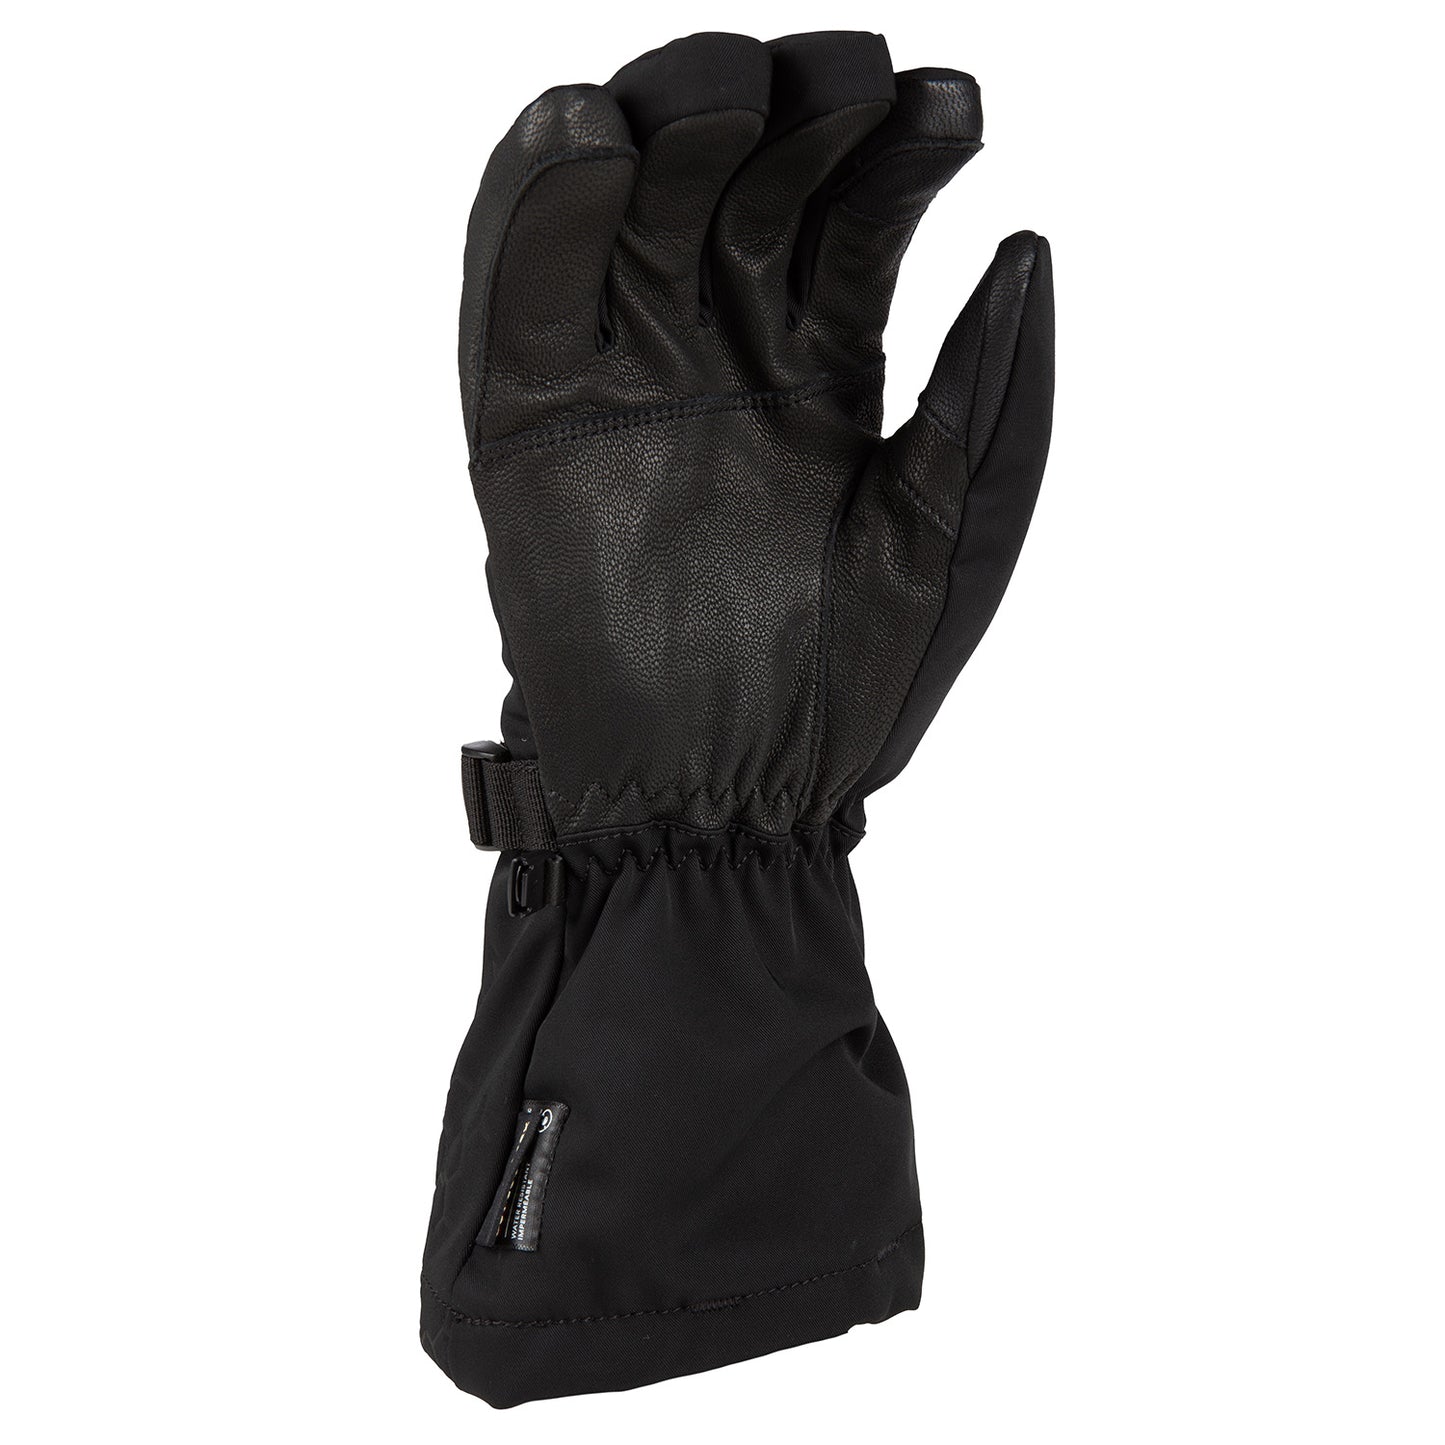 Powerxross Gauntlet Gloves